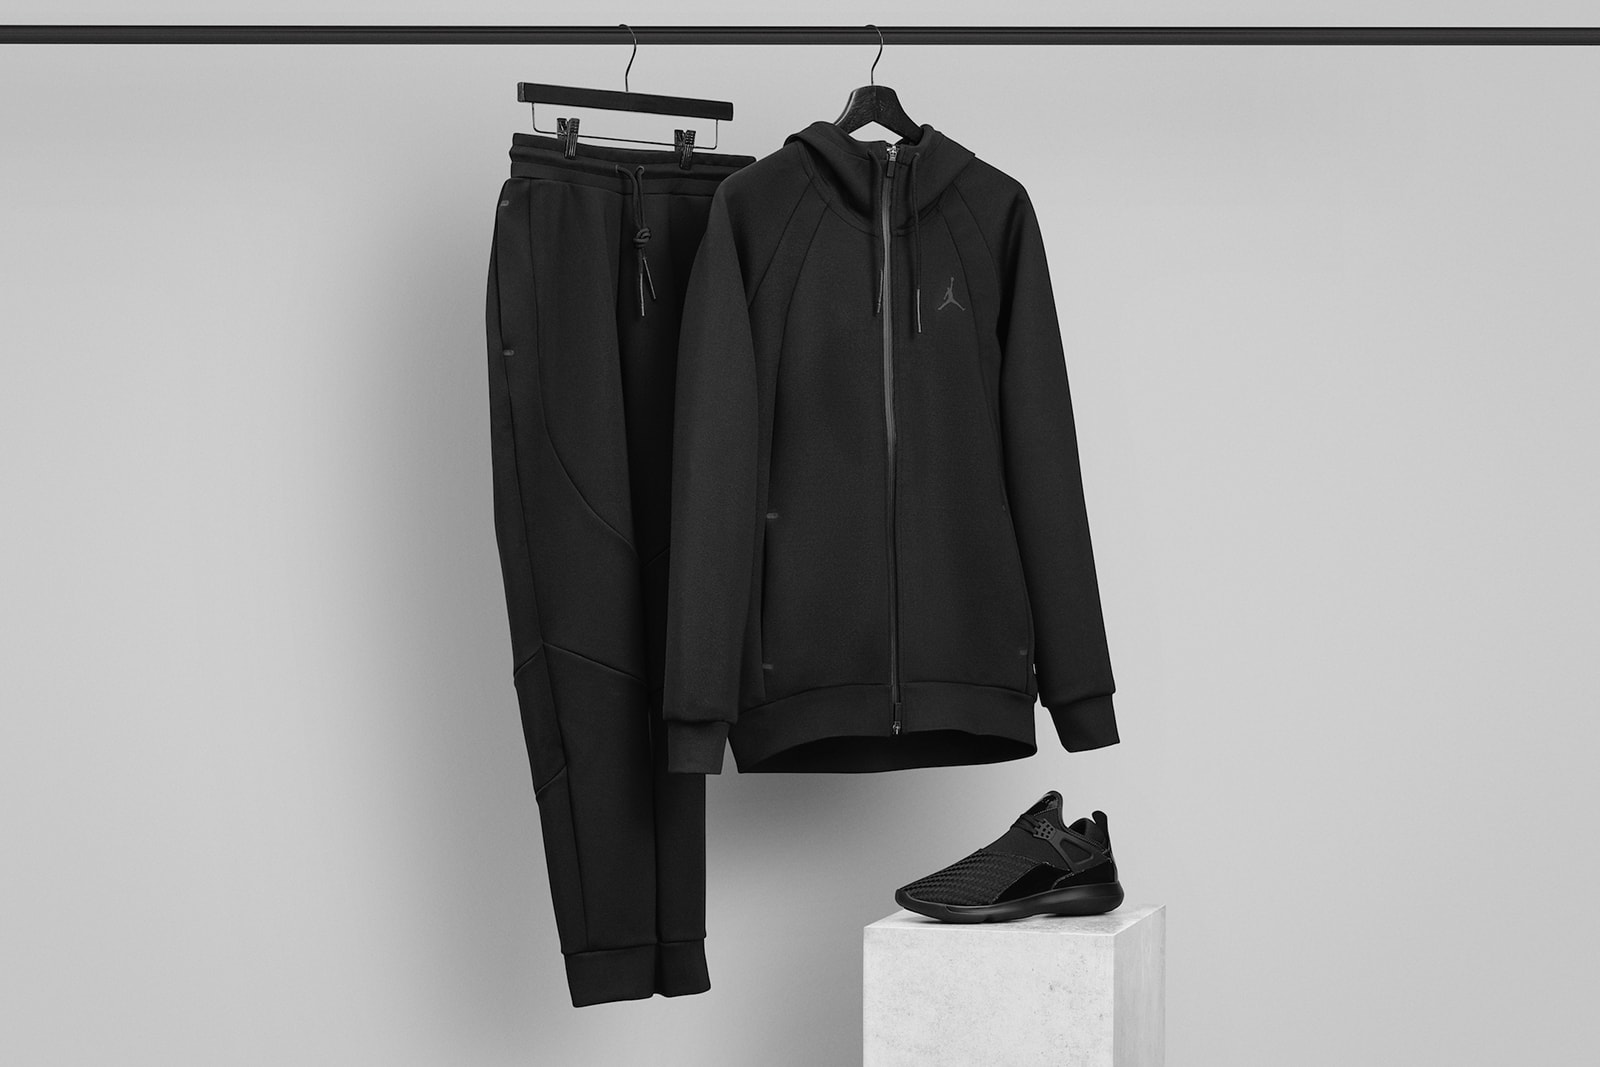 Jordan Brand 2017 Fall Collection Tech Fleece Hoodie Bomber Jacket Black White